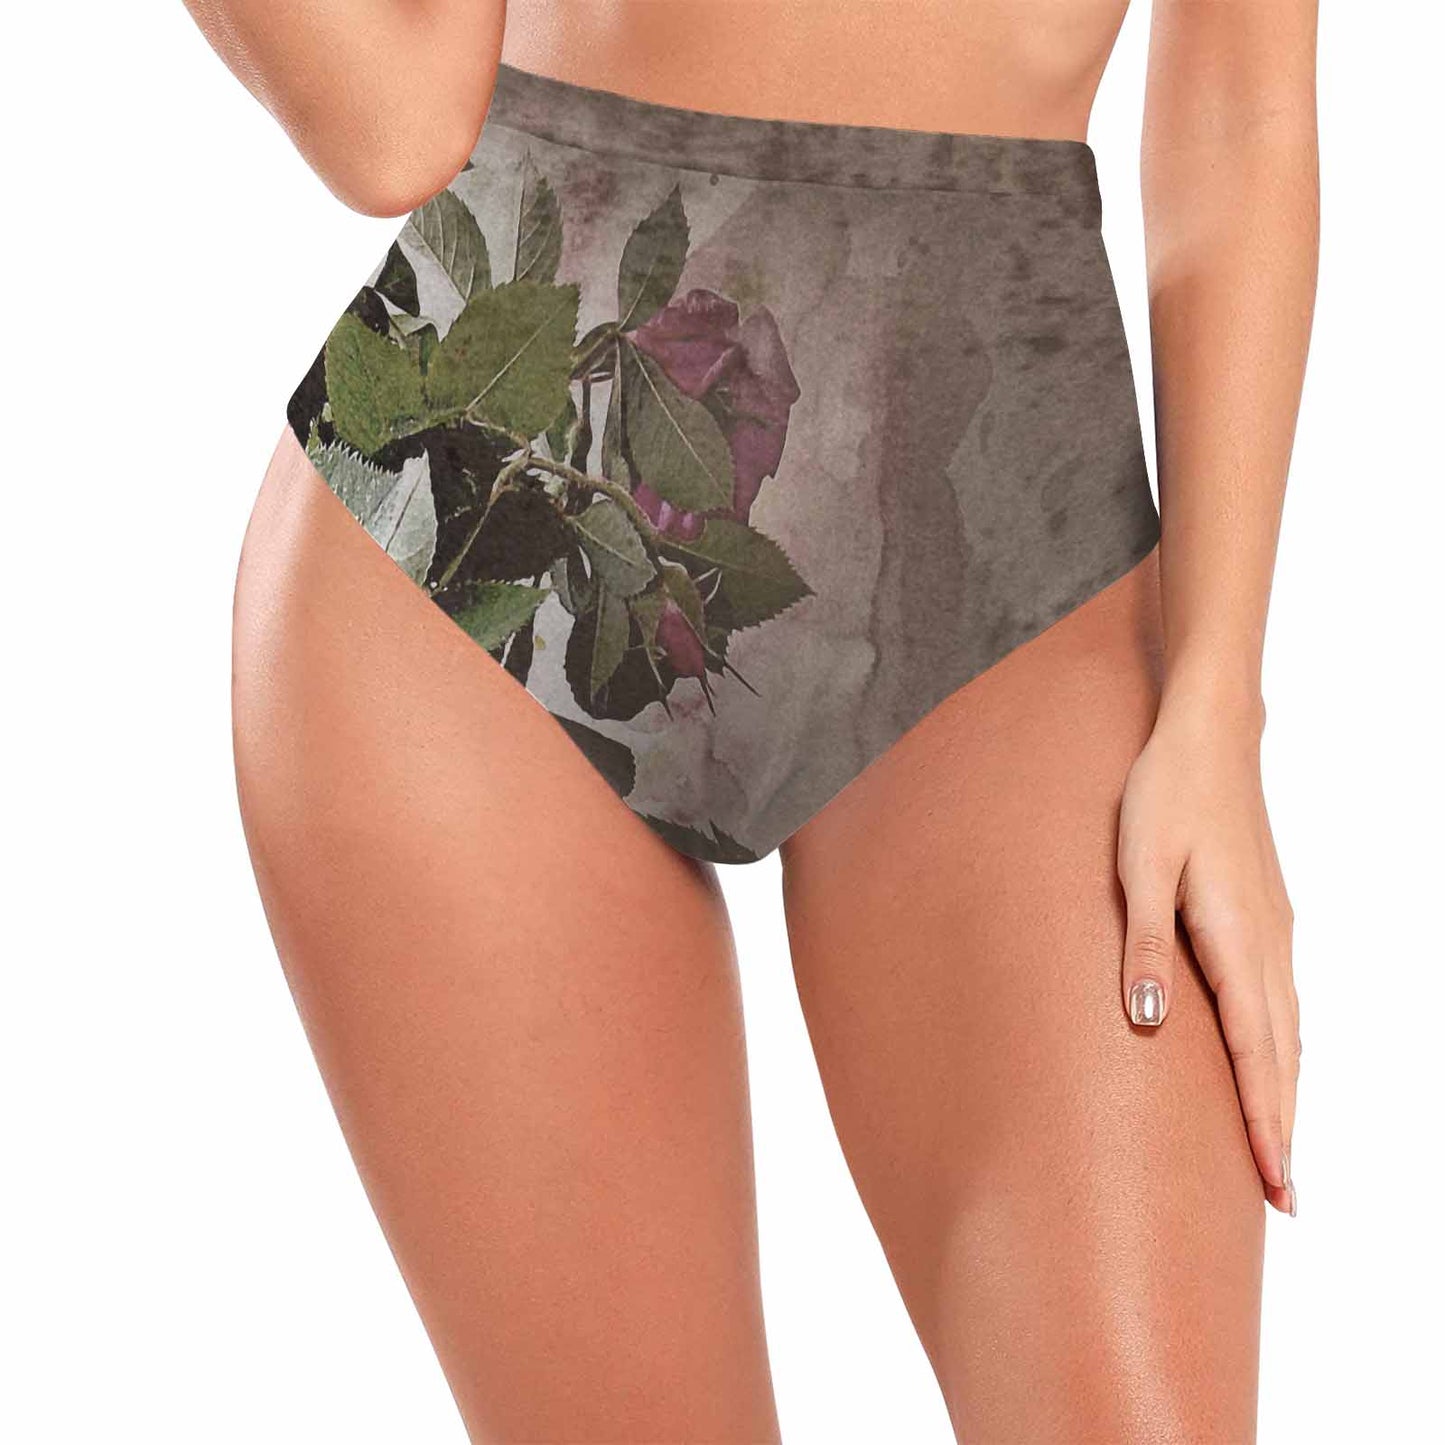 Vintage floral High waist bikini bottom, Design 22x